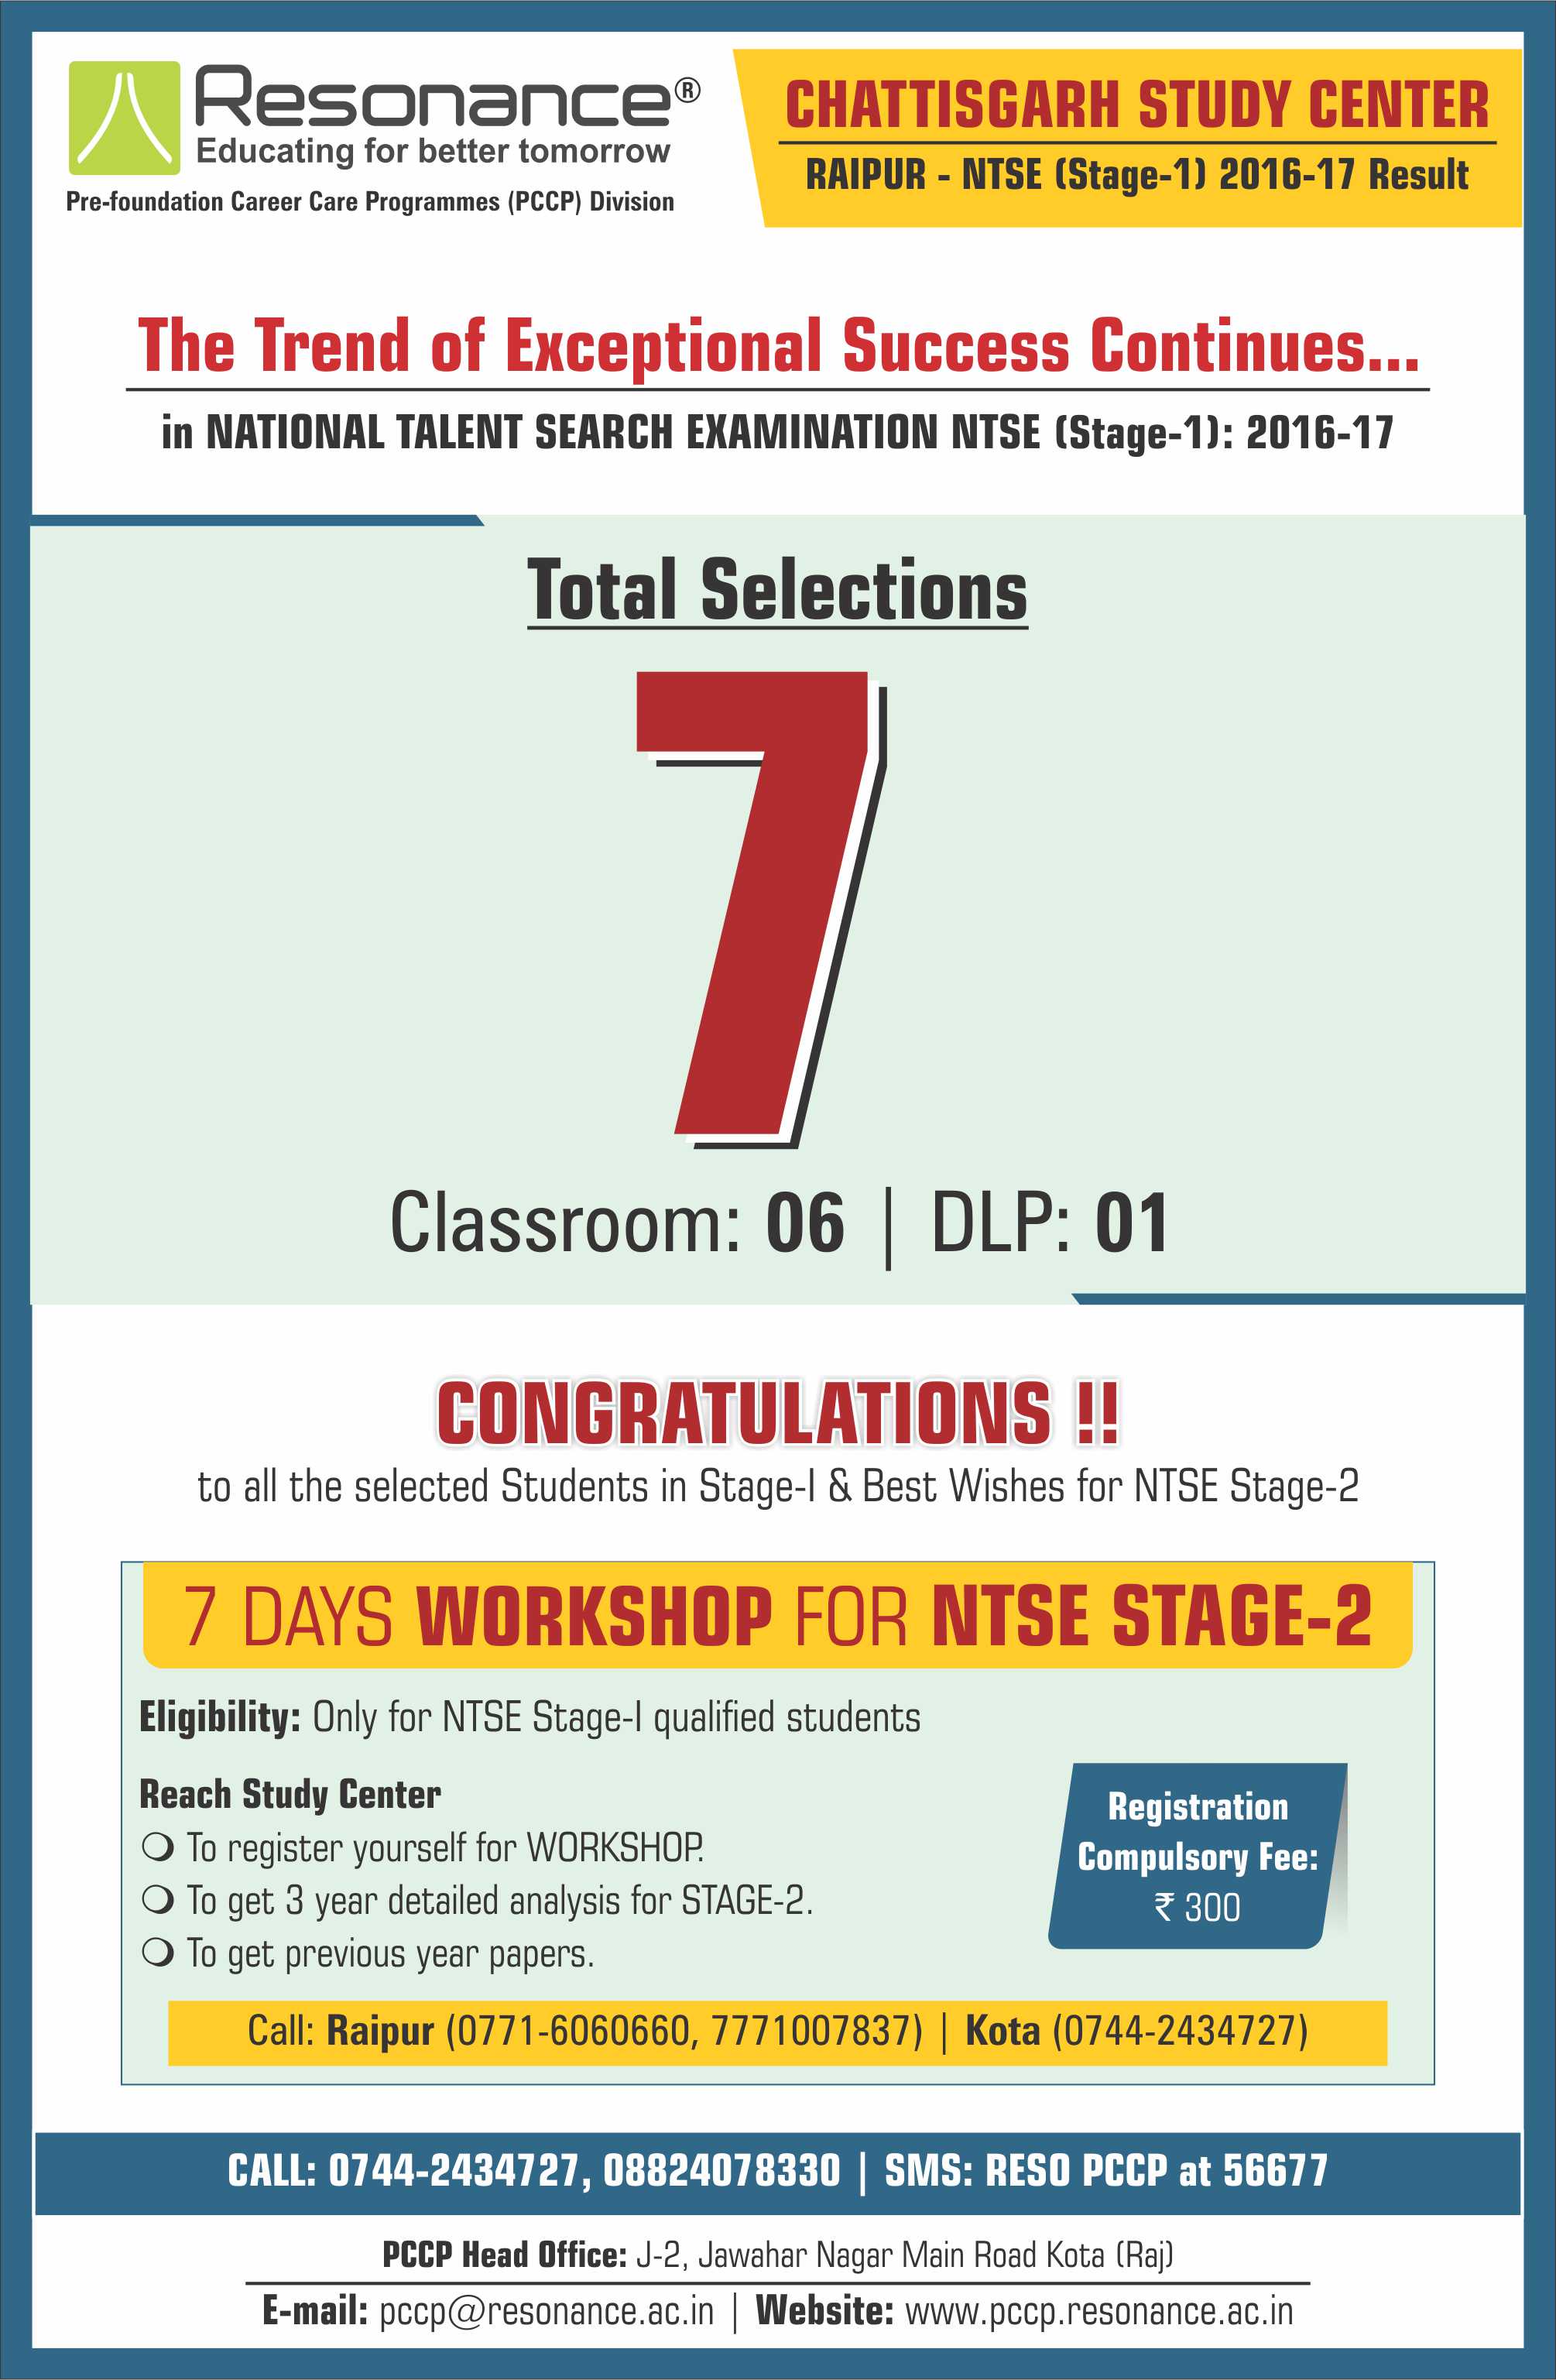 Chhattisgarh-NTSE-Stage-1-2016-17